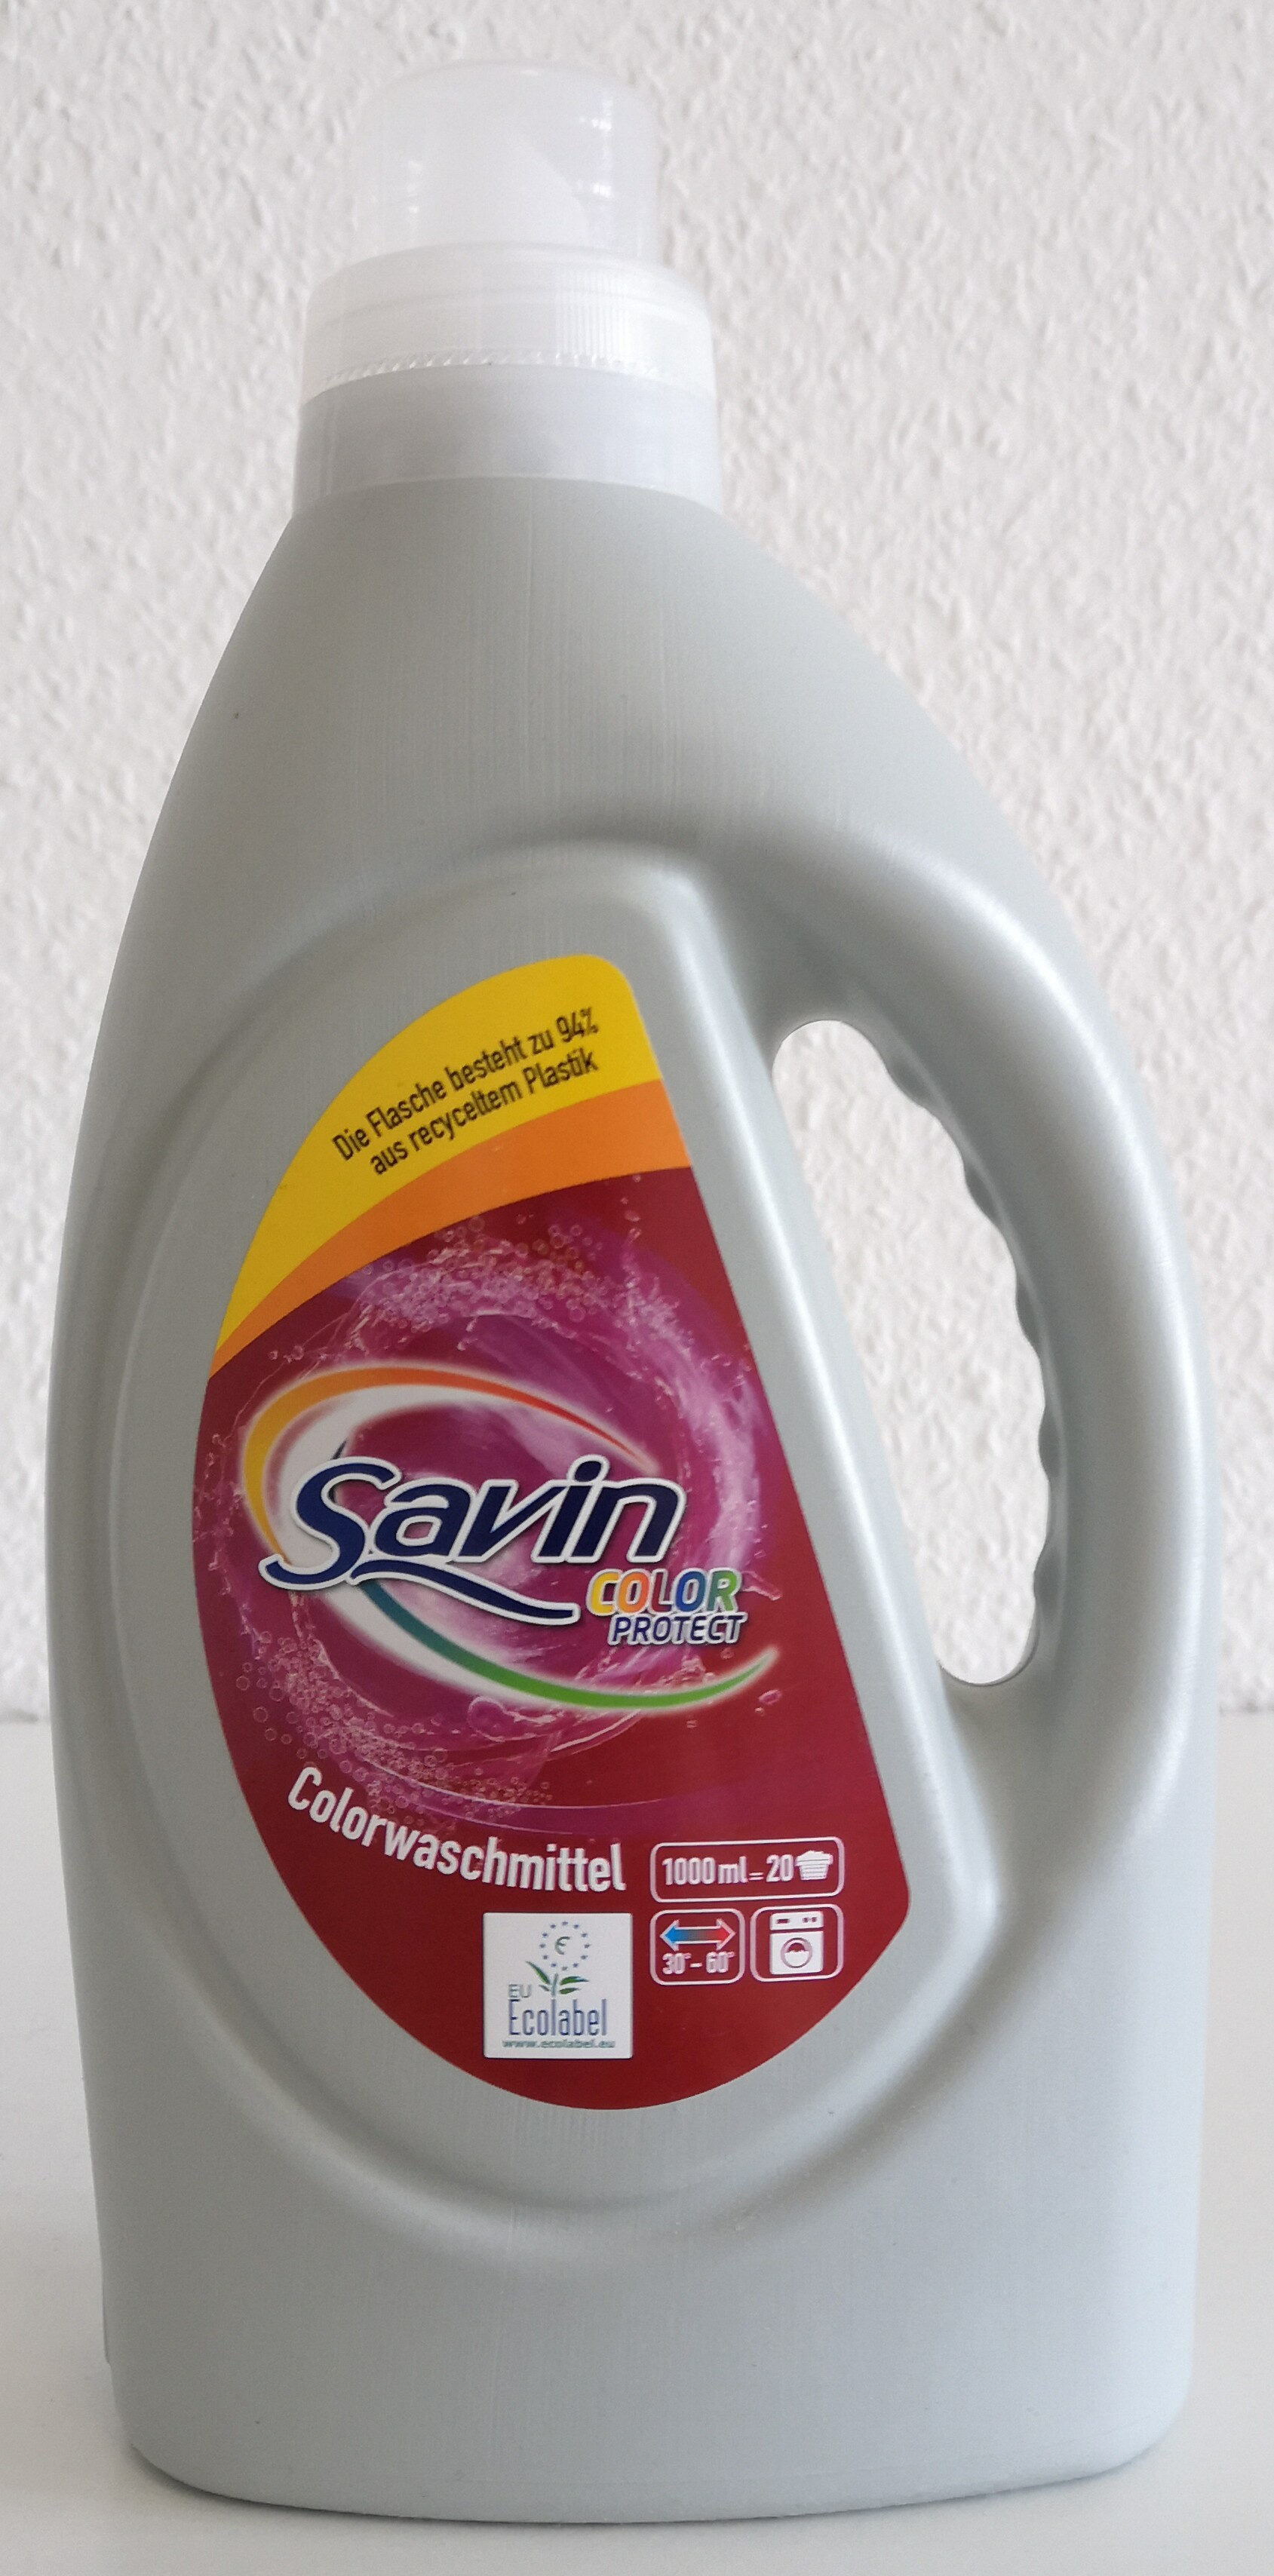 Savin Color Protect - Product - de